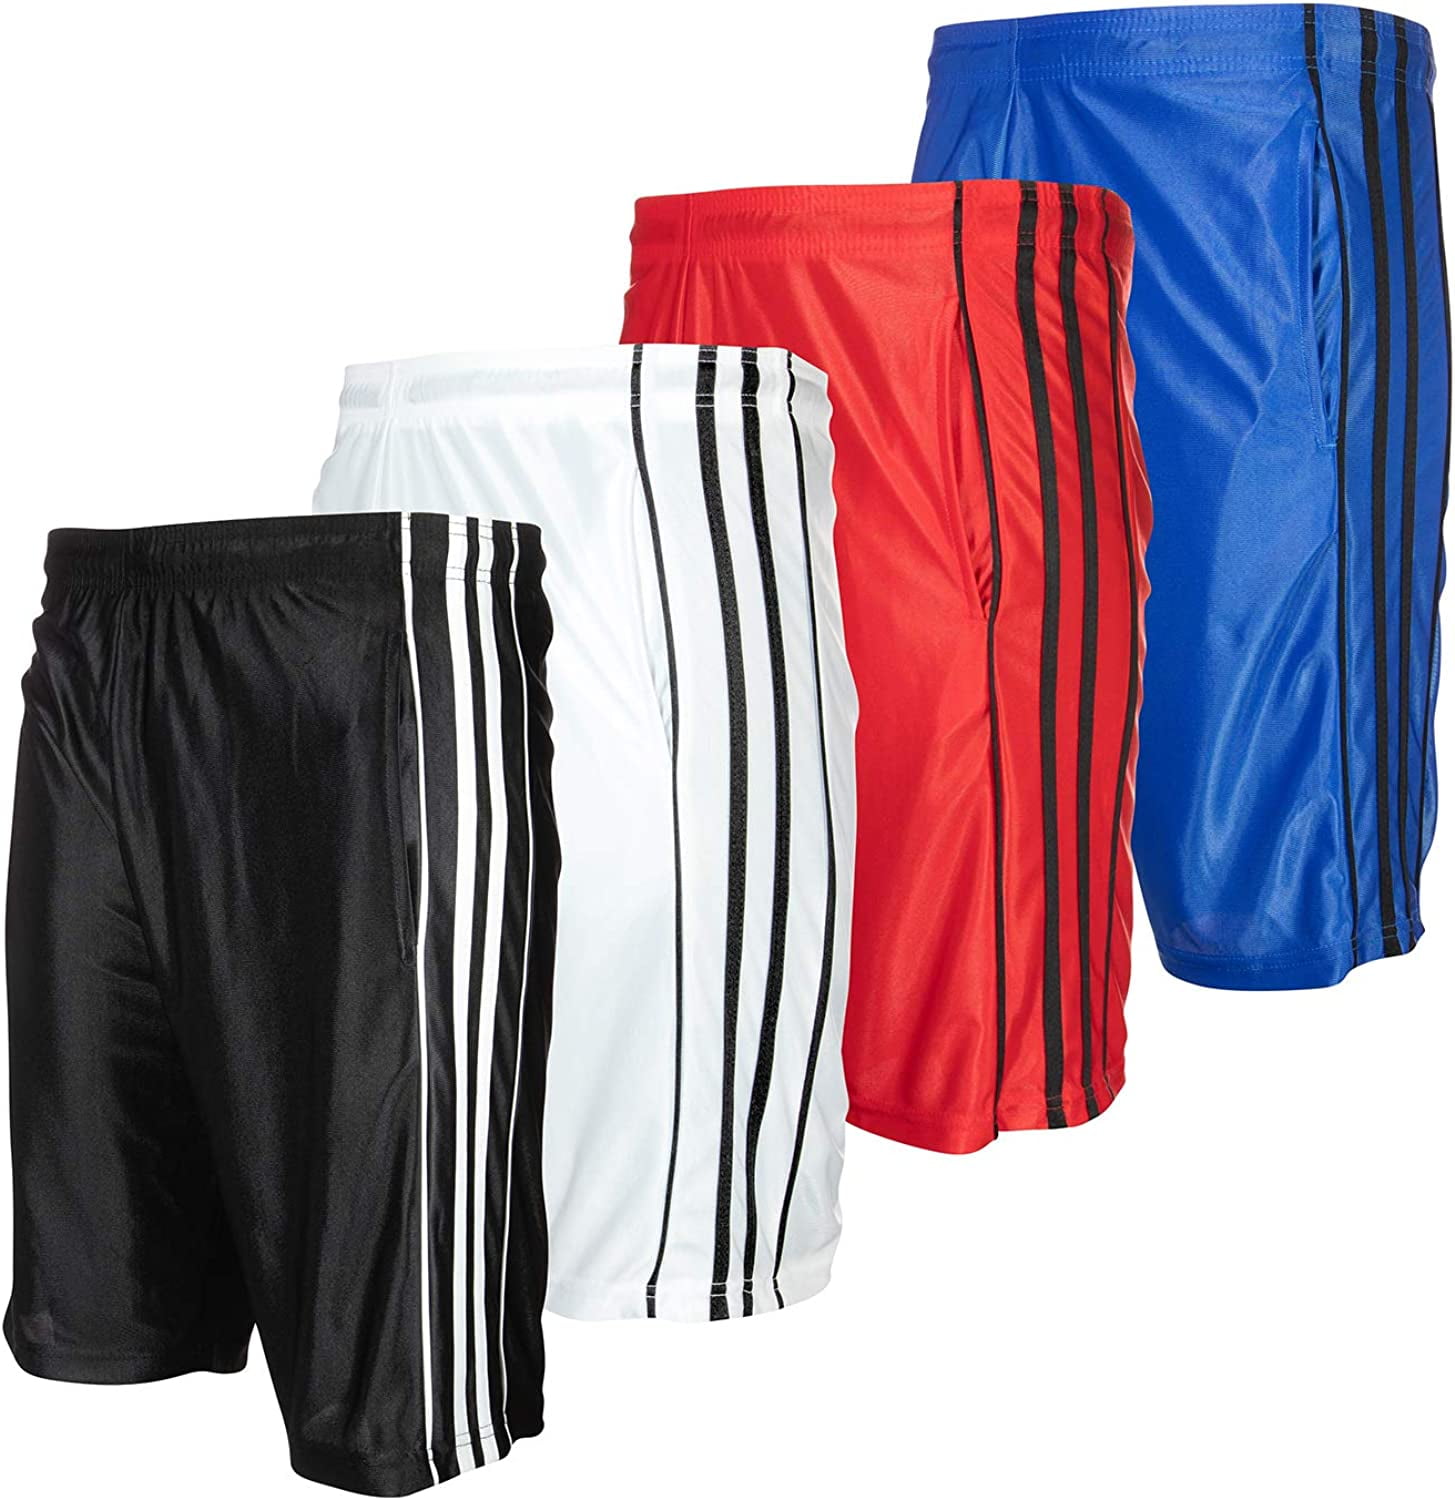 KINETIC brand Men Basic shorts High quality fashion trend casual shorts  basketball training Quick dry mesh breathable Men shorts - AliExpress